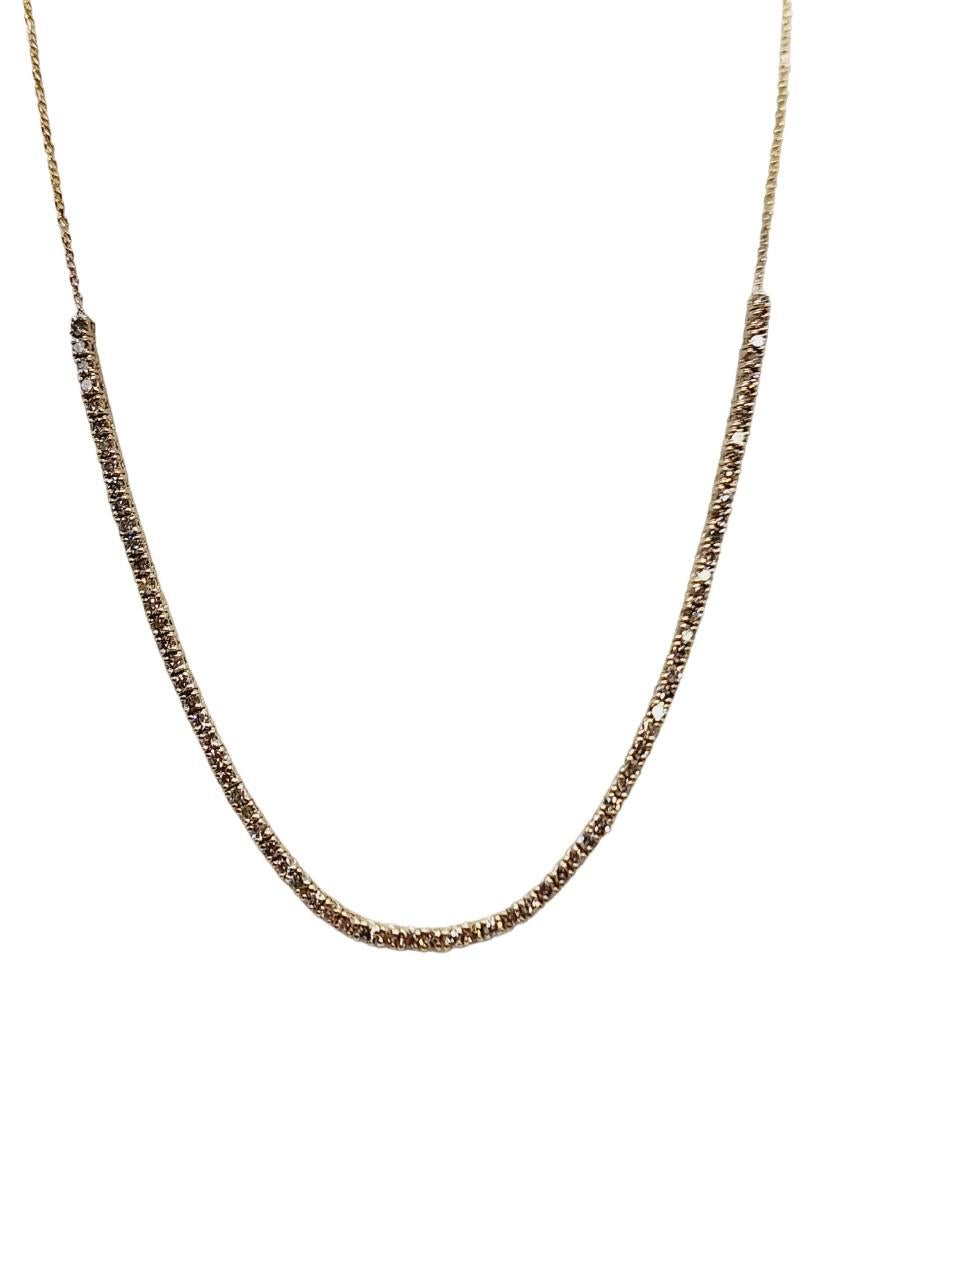 Round Cut 1.65 Carat Mini Diamond Necklace Chain 14 Karat Yellow Gold  23